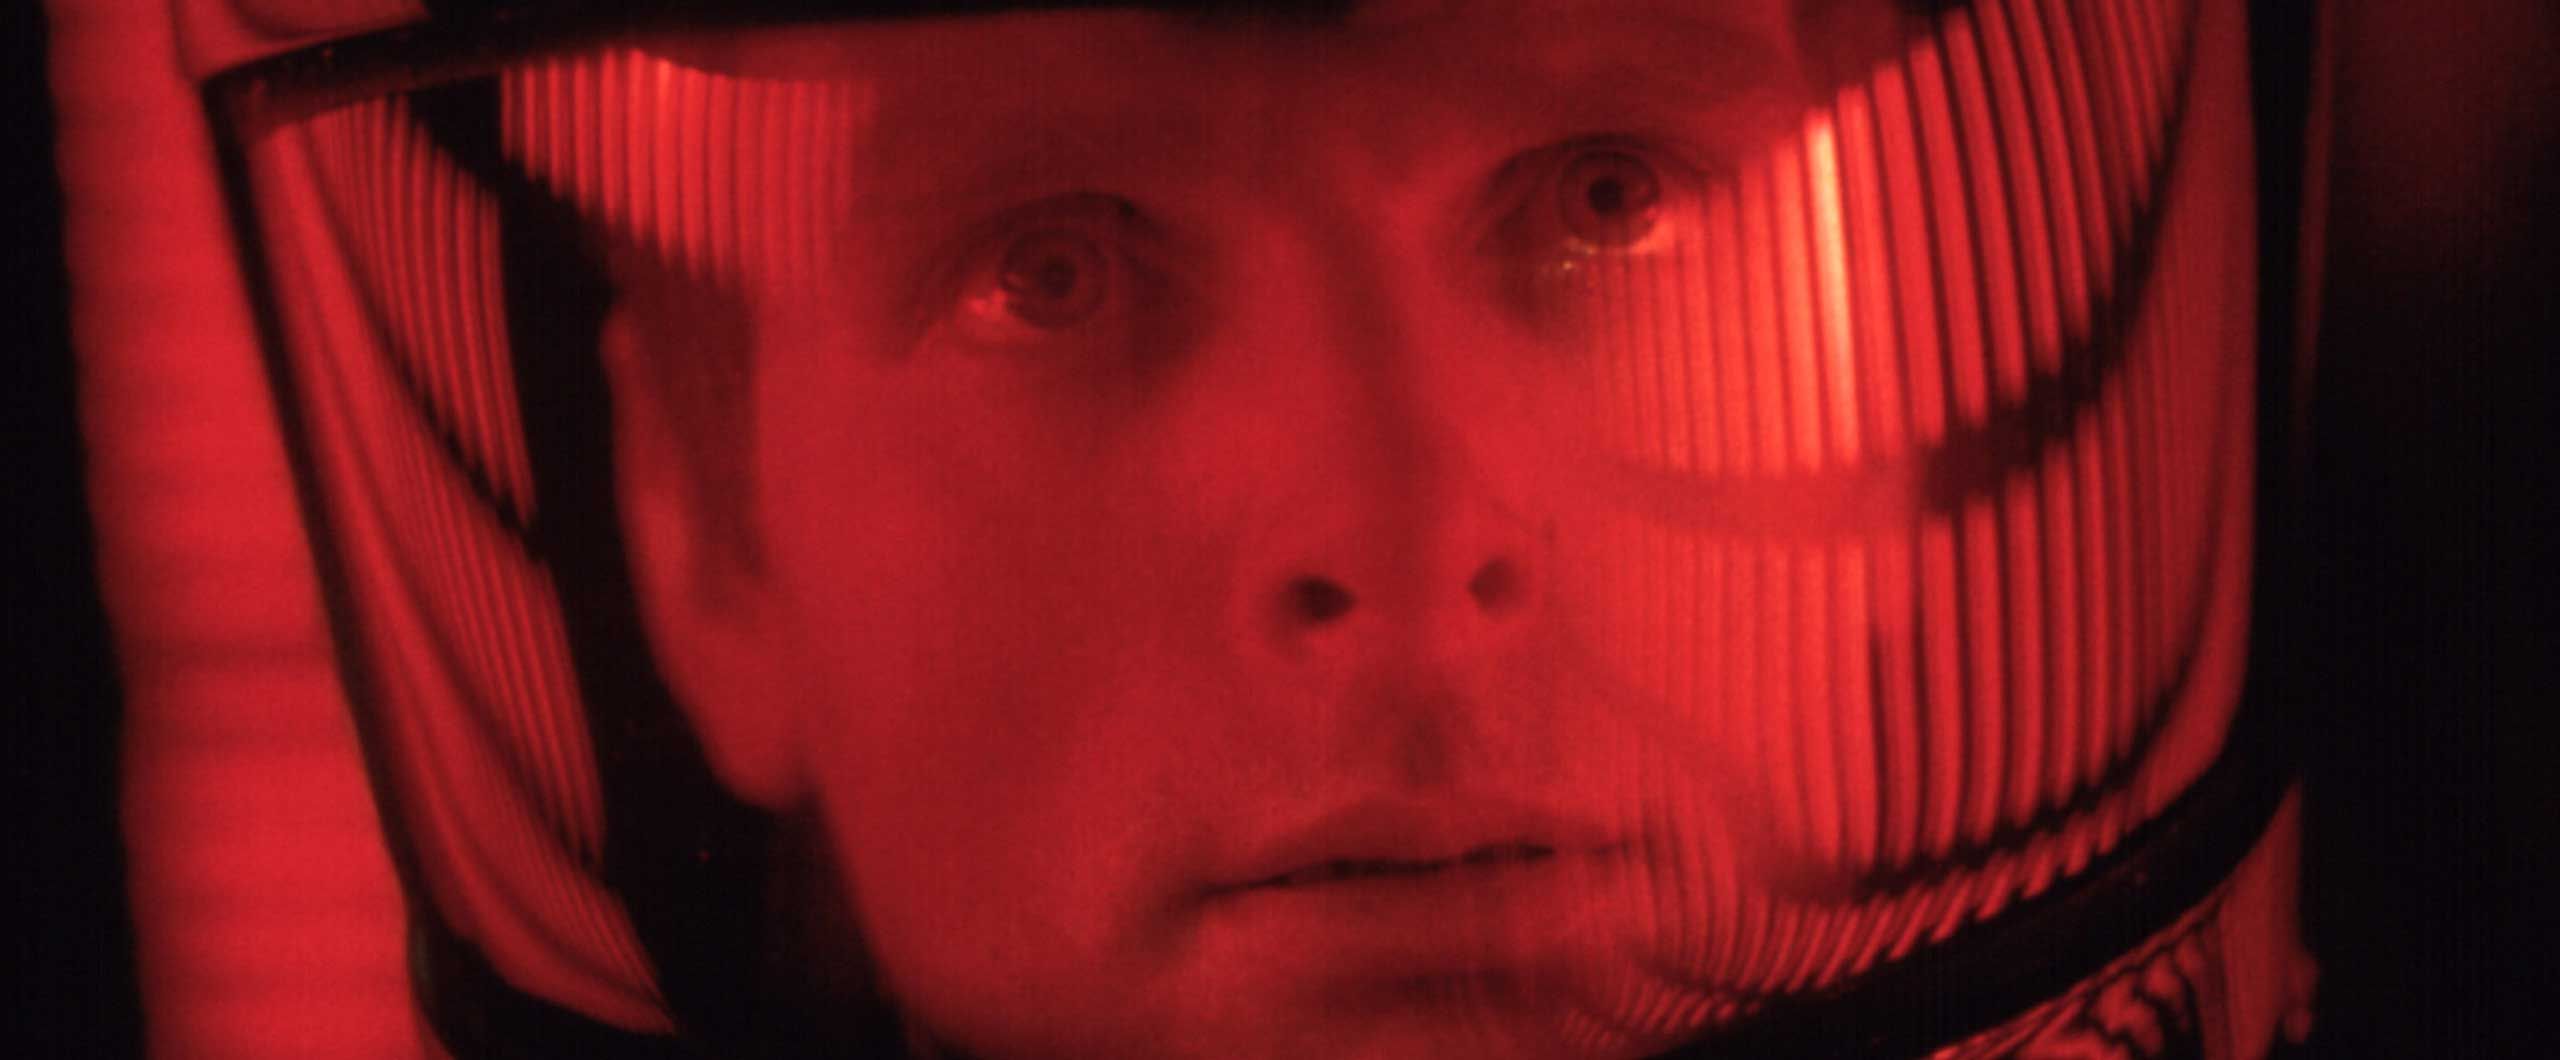 Kubrick's Cruise Kidman Schnitzler Sex Sizzler - Tablet Magazine